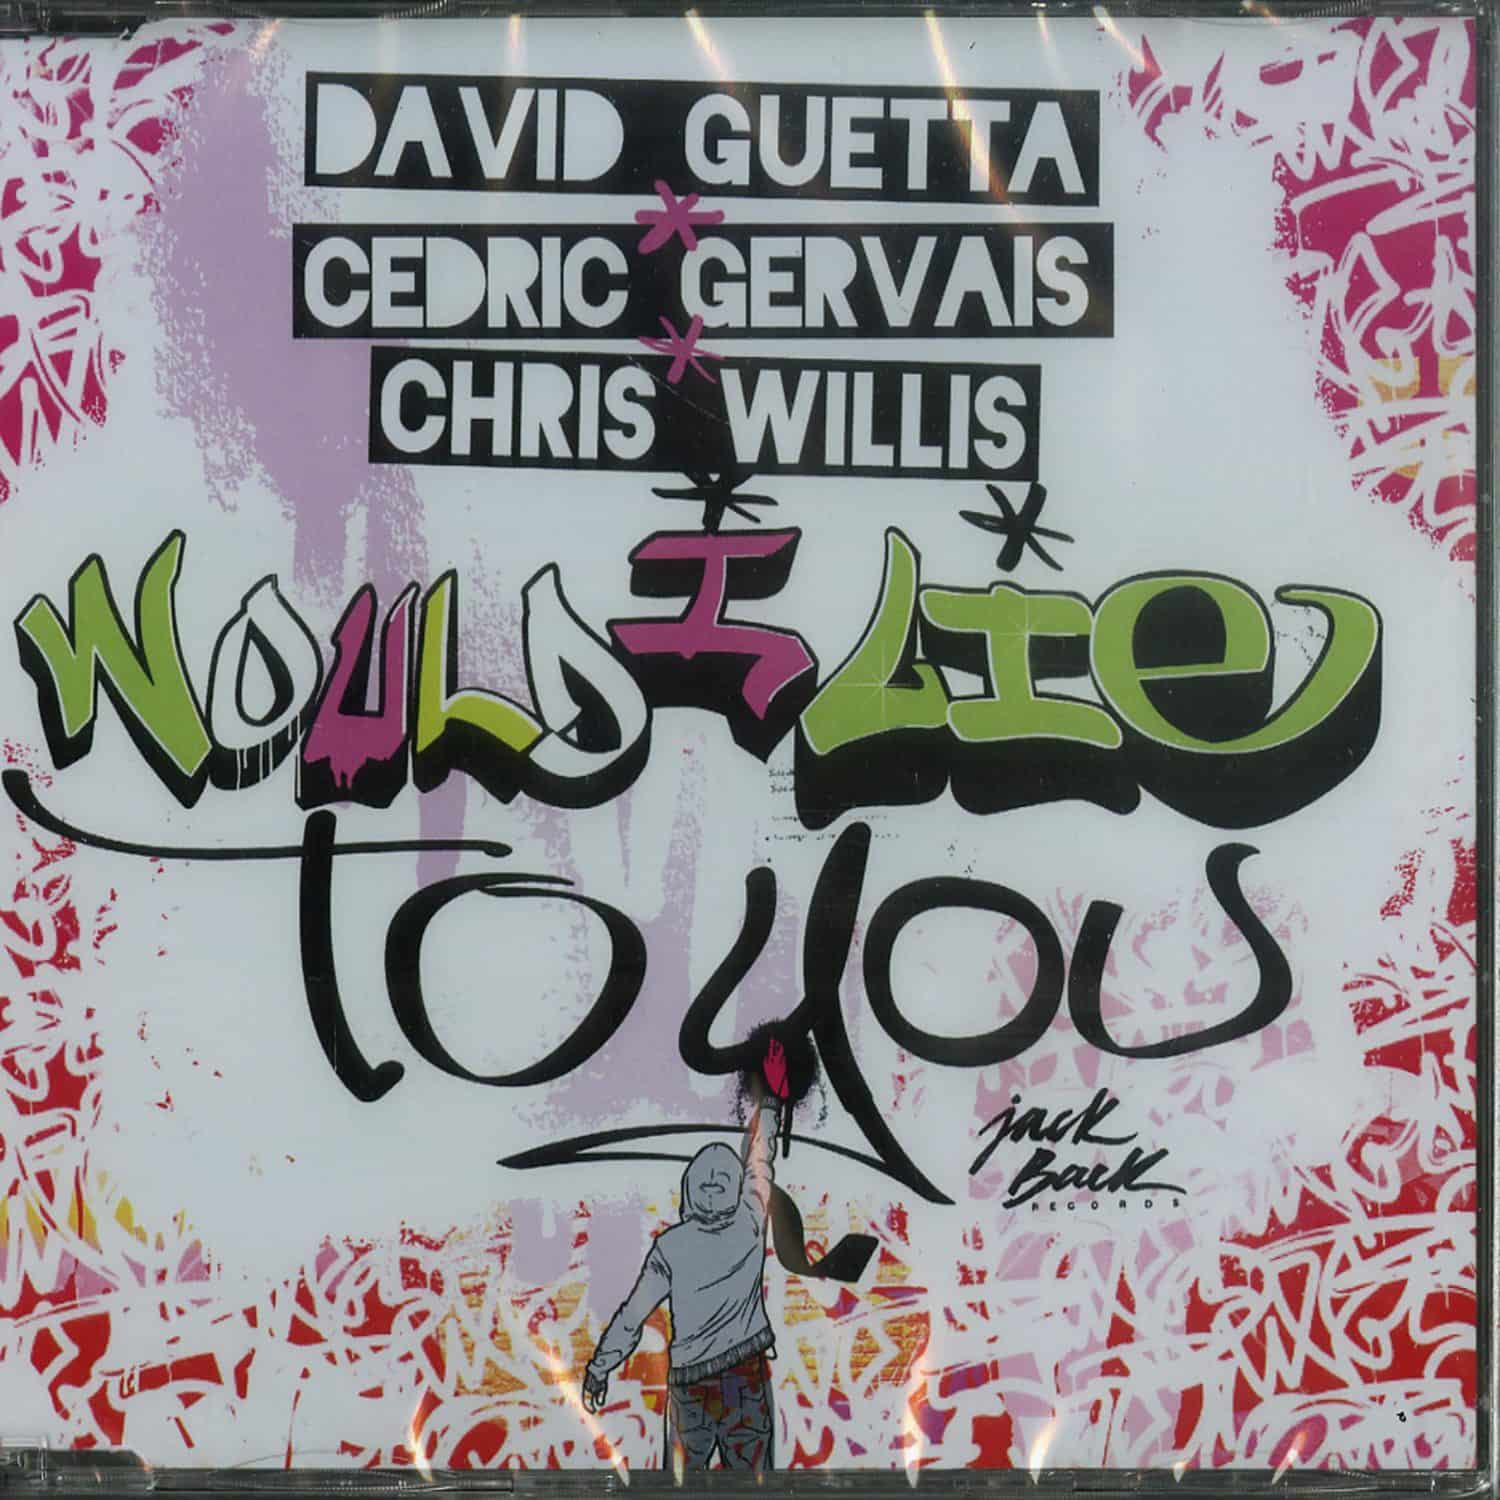 David Guetta /cedric Gervais / Chris Willis - WOULD I LIE TO YOU 